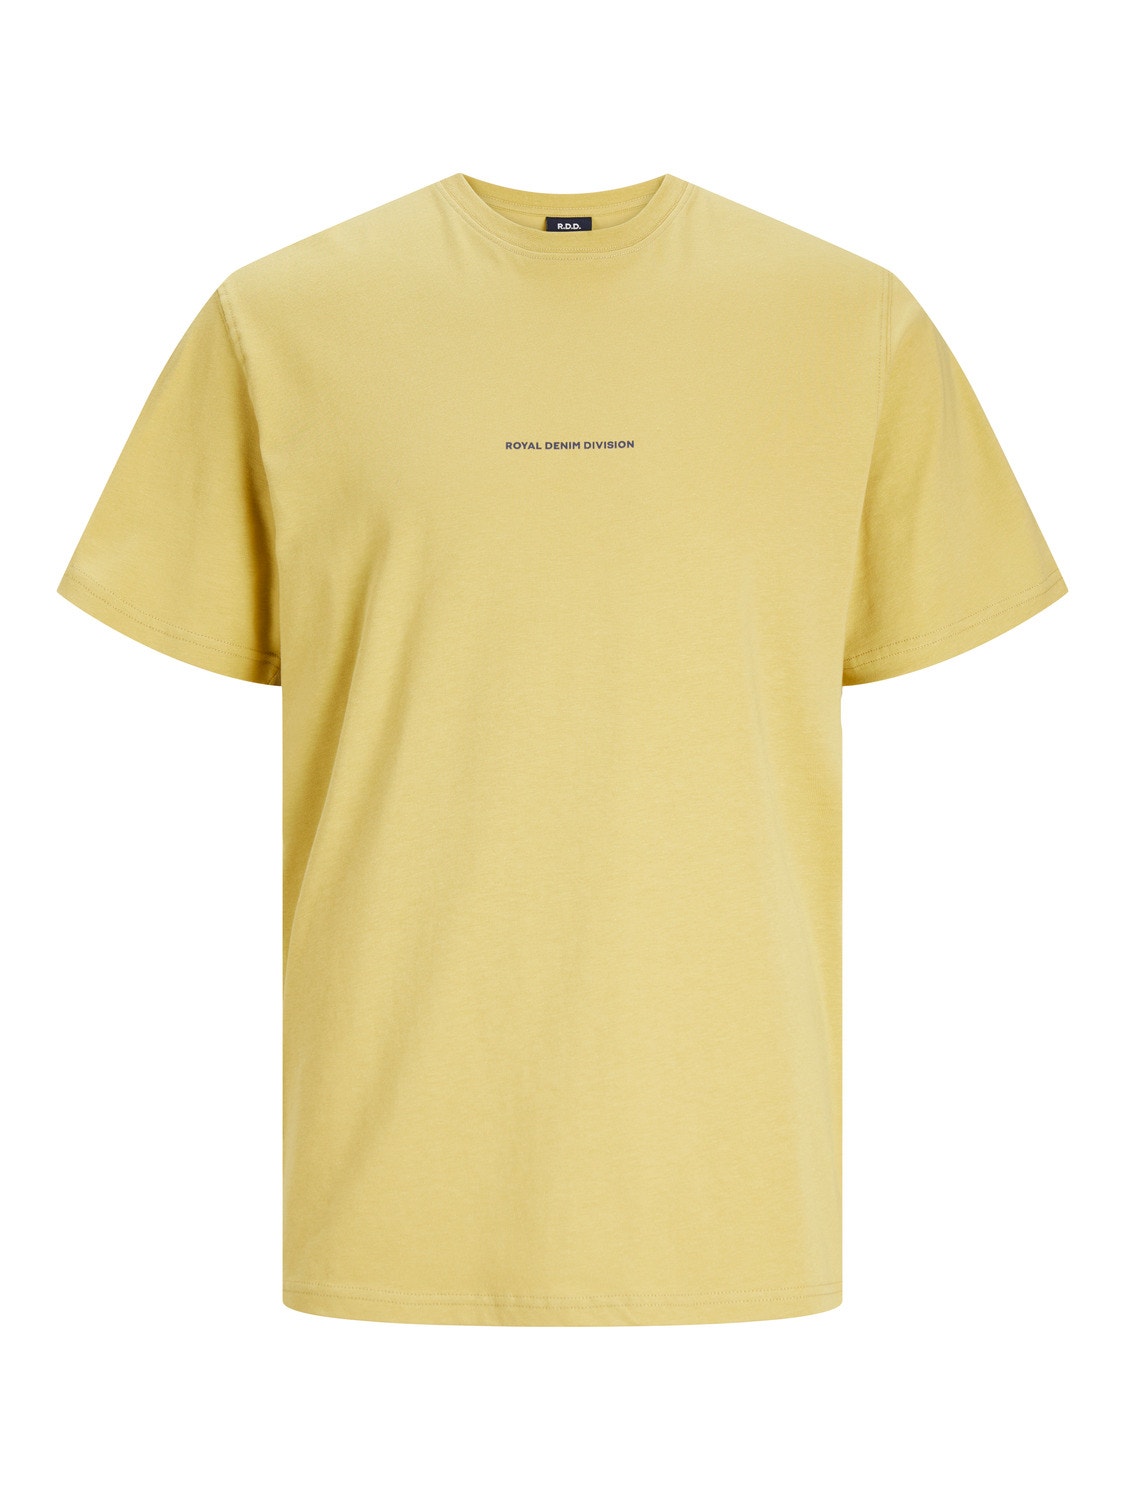 Jack & Jones RDD T-shirt Estampar Decote Redondo -Antique Gold - 12252153